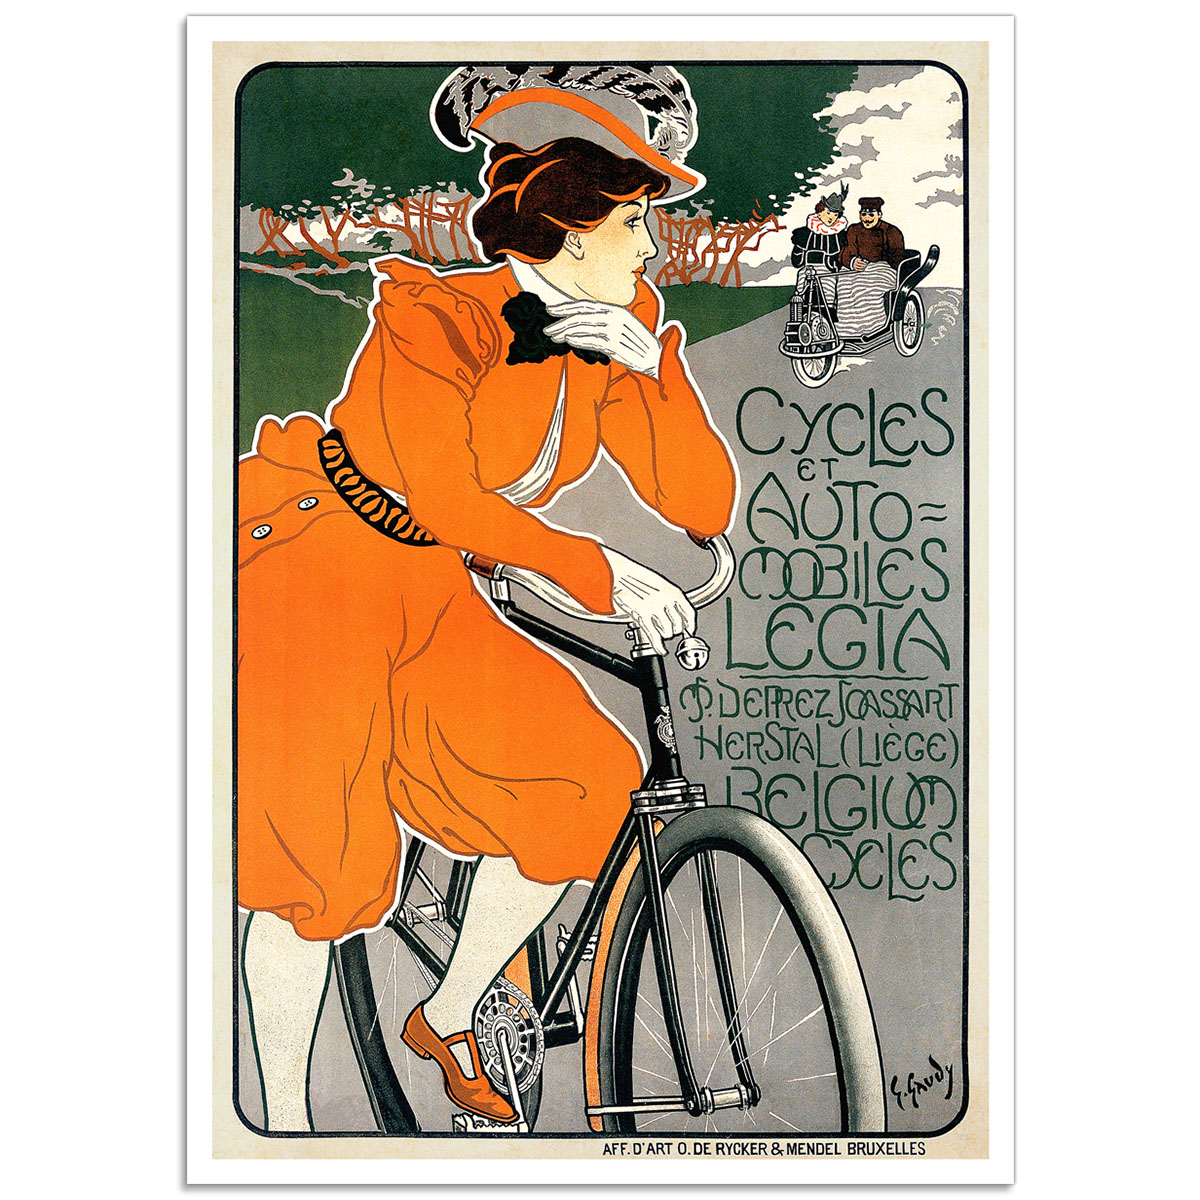 Vintage Bicycle Promotional Poster - Cycles et Automobiles Legia